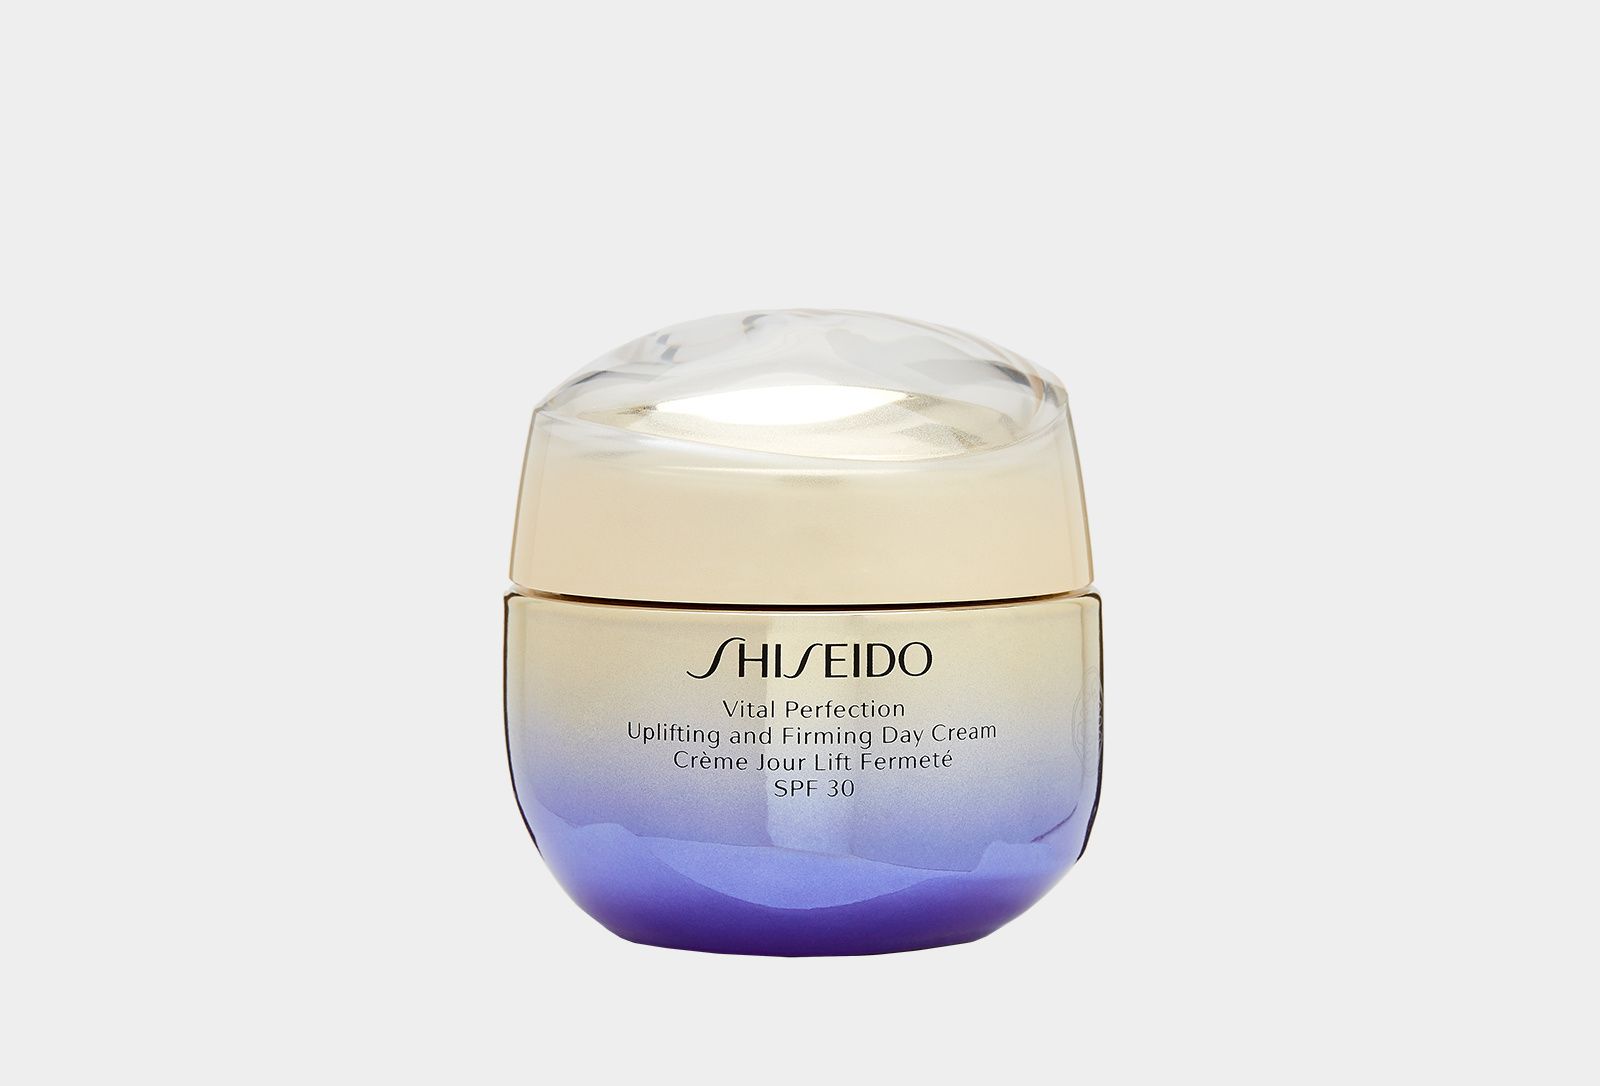 Shiseido vital perfection uplifting